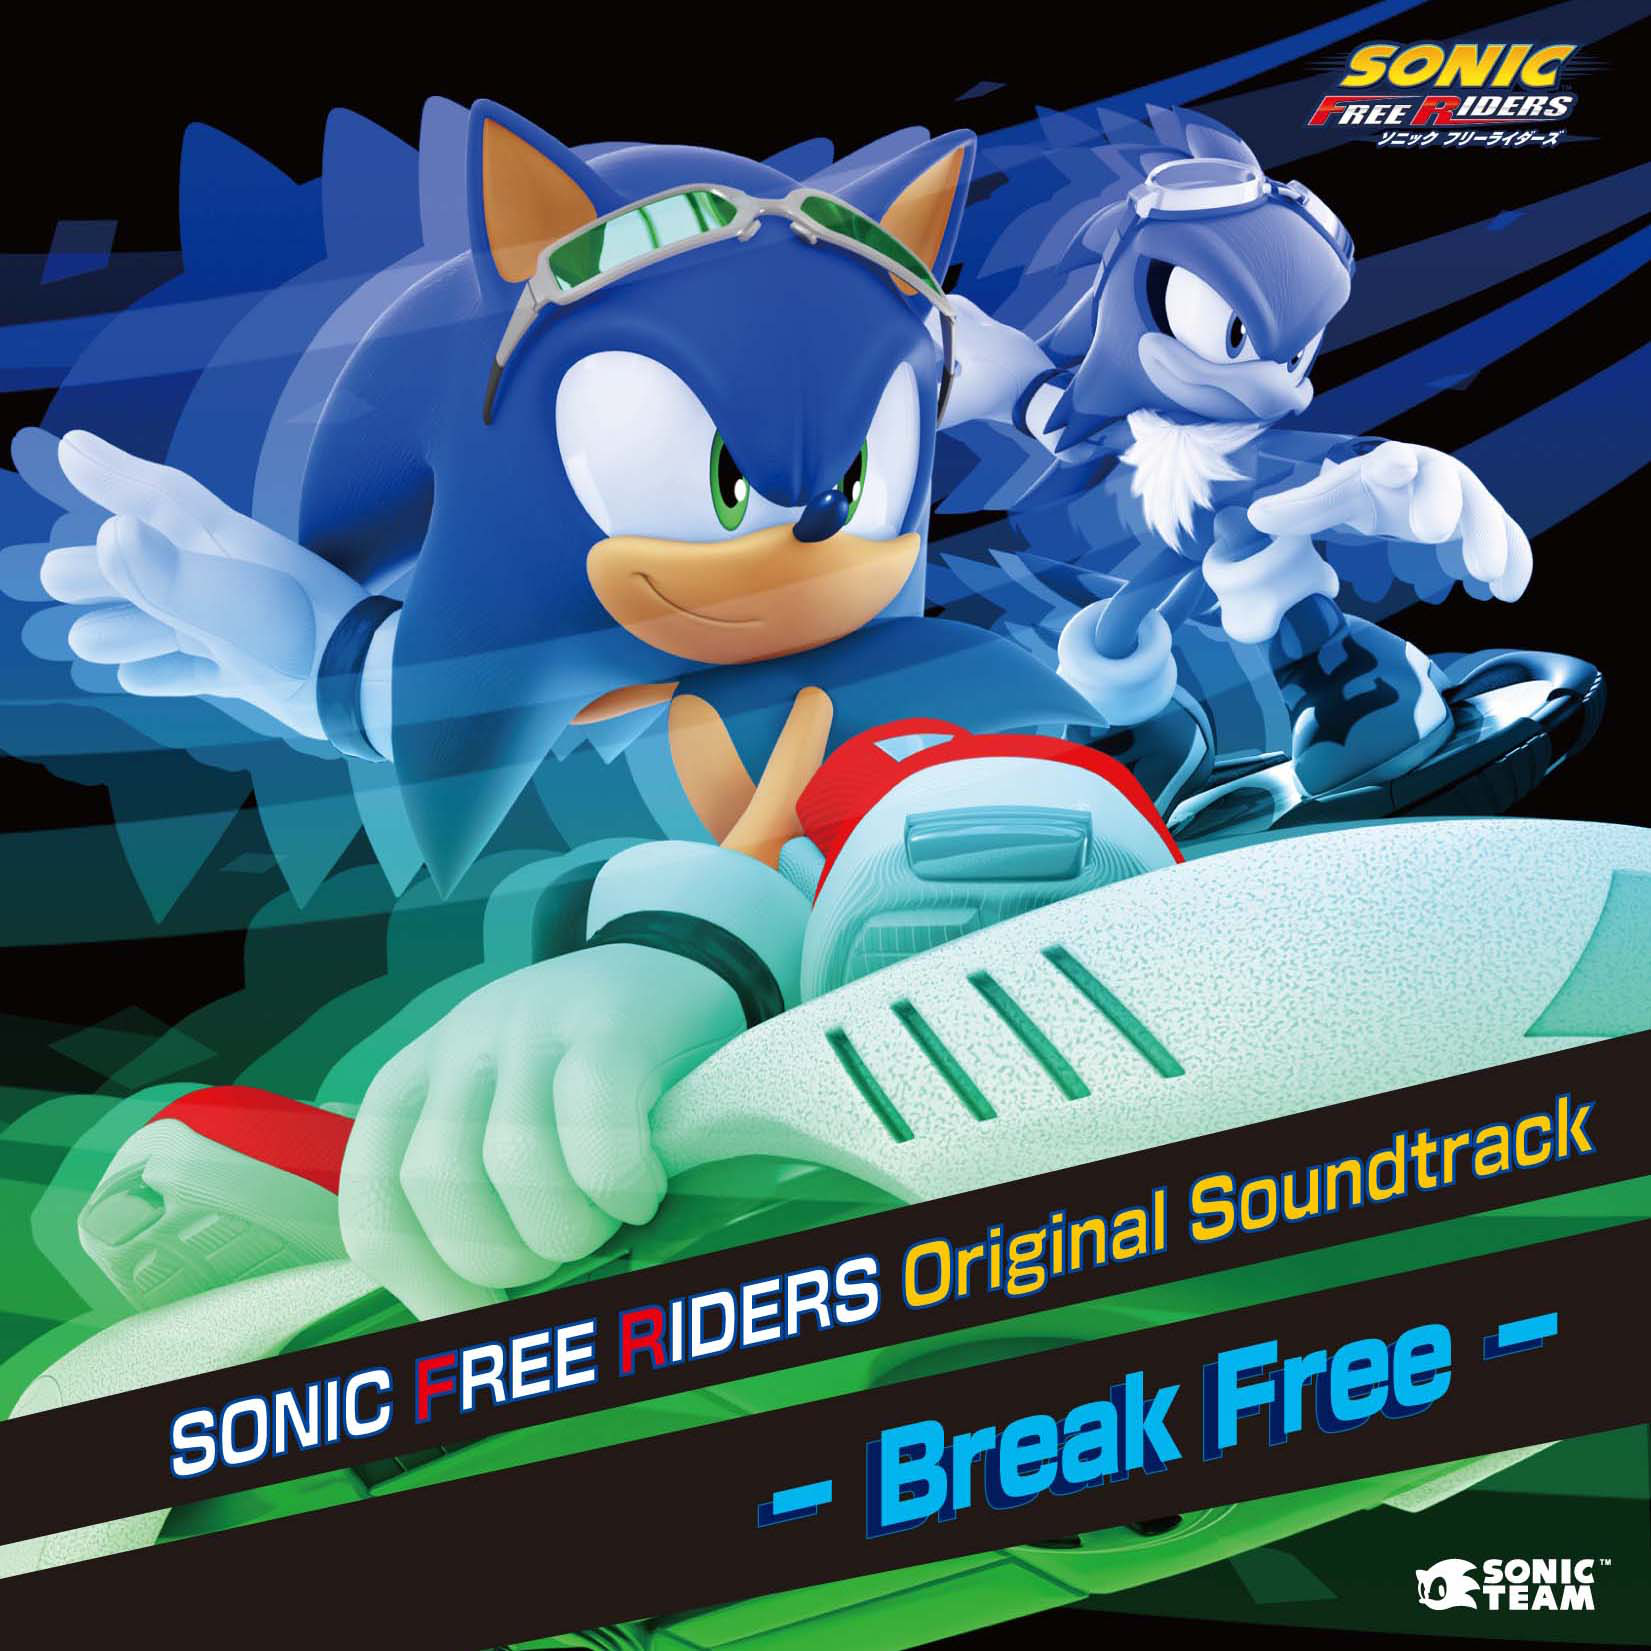 Break Free:Sonic Free Riders Original Soundtrack